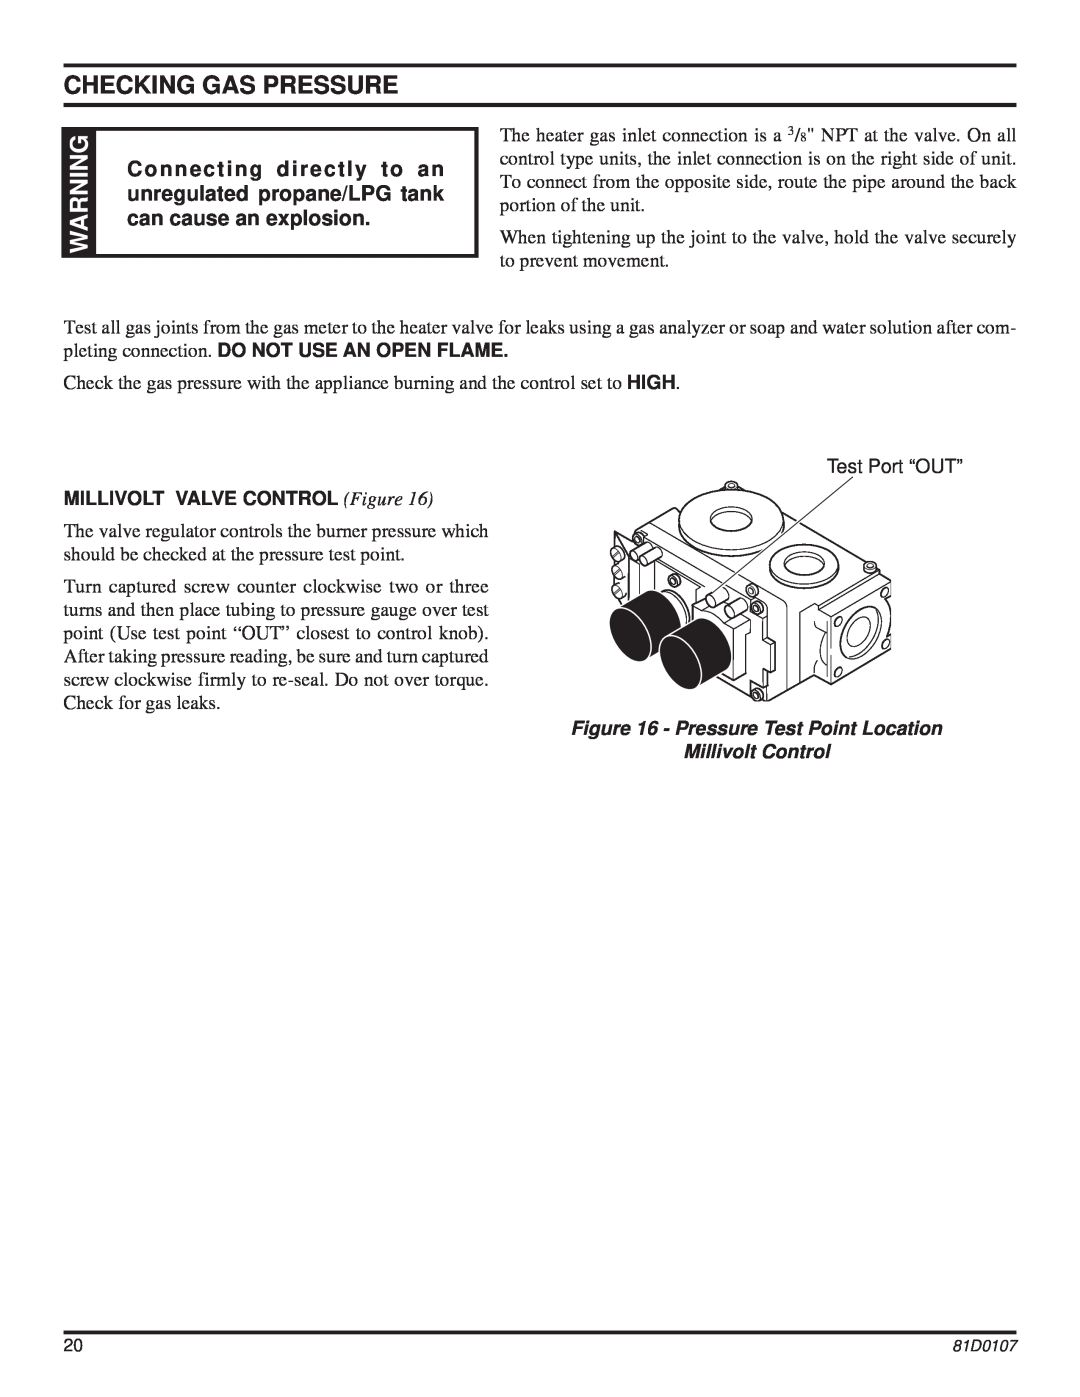 Monessen Hearth NB24, NB18 operating instructions Checking Gas Pressure, MILLIVOLT VALVE CONTROL Figure 